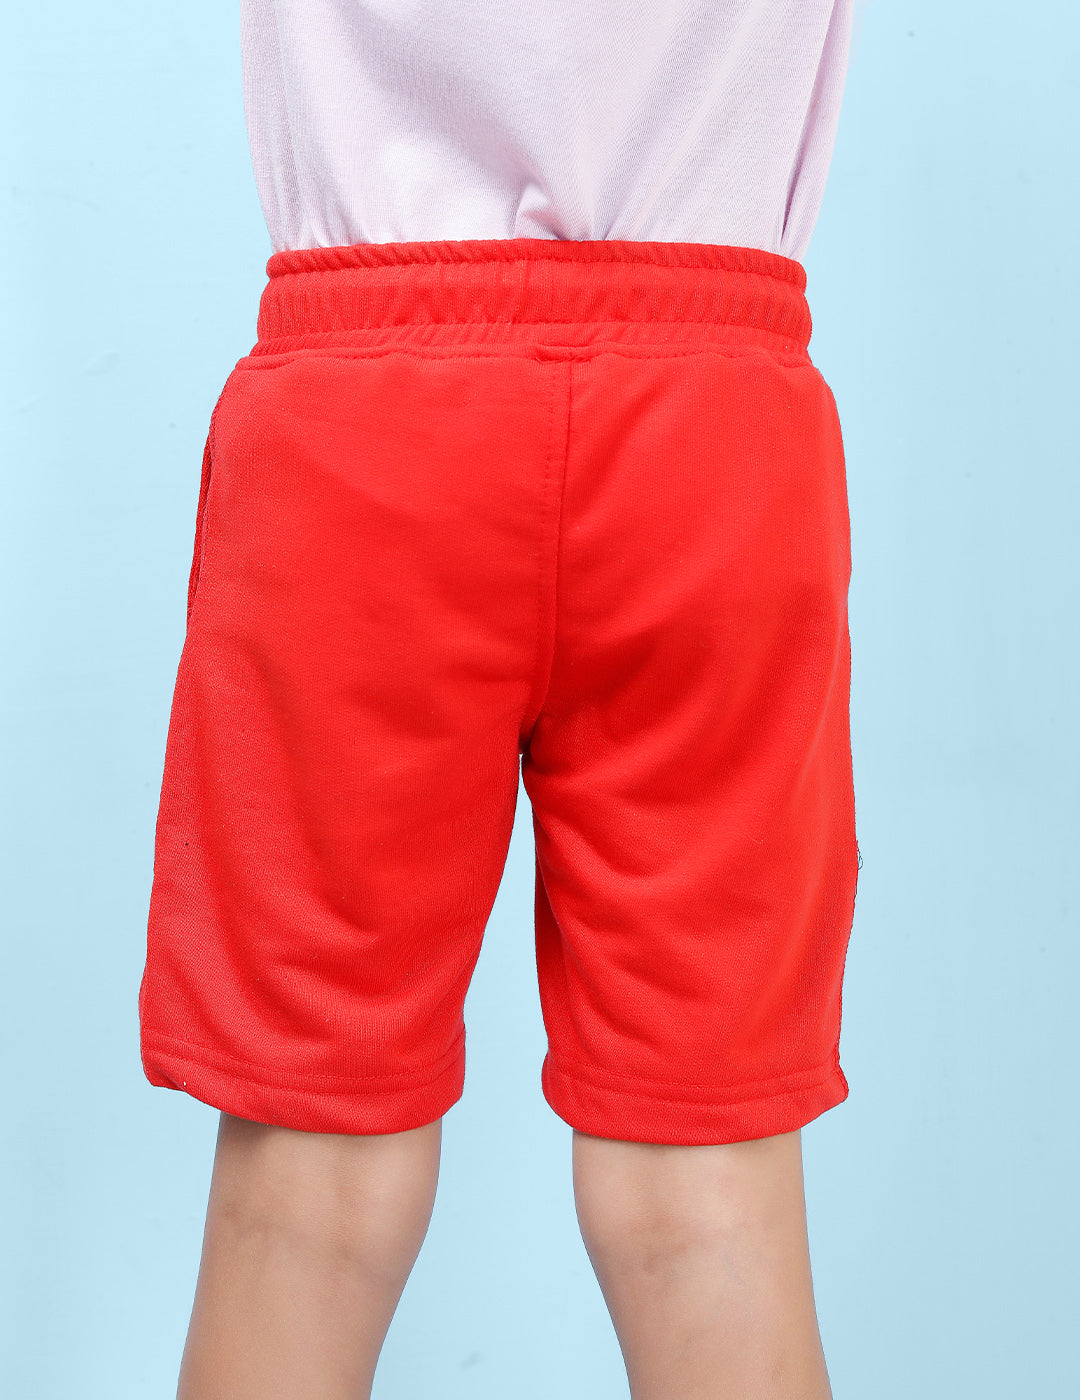 Nusyl Playful Printed Red Boys Shorts